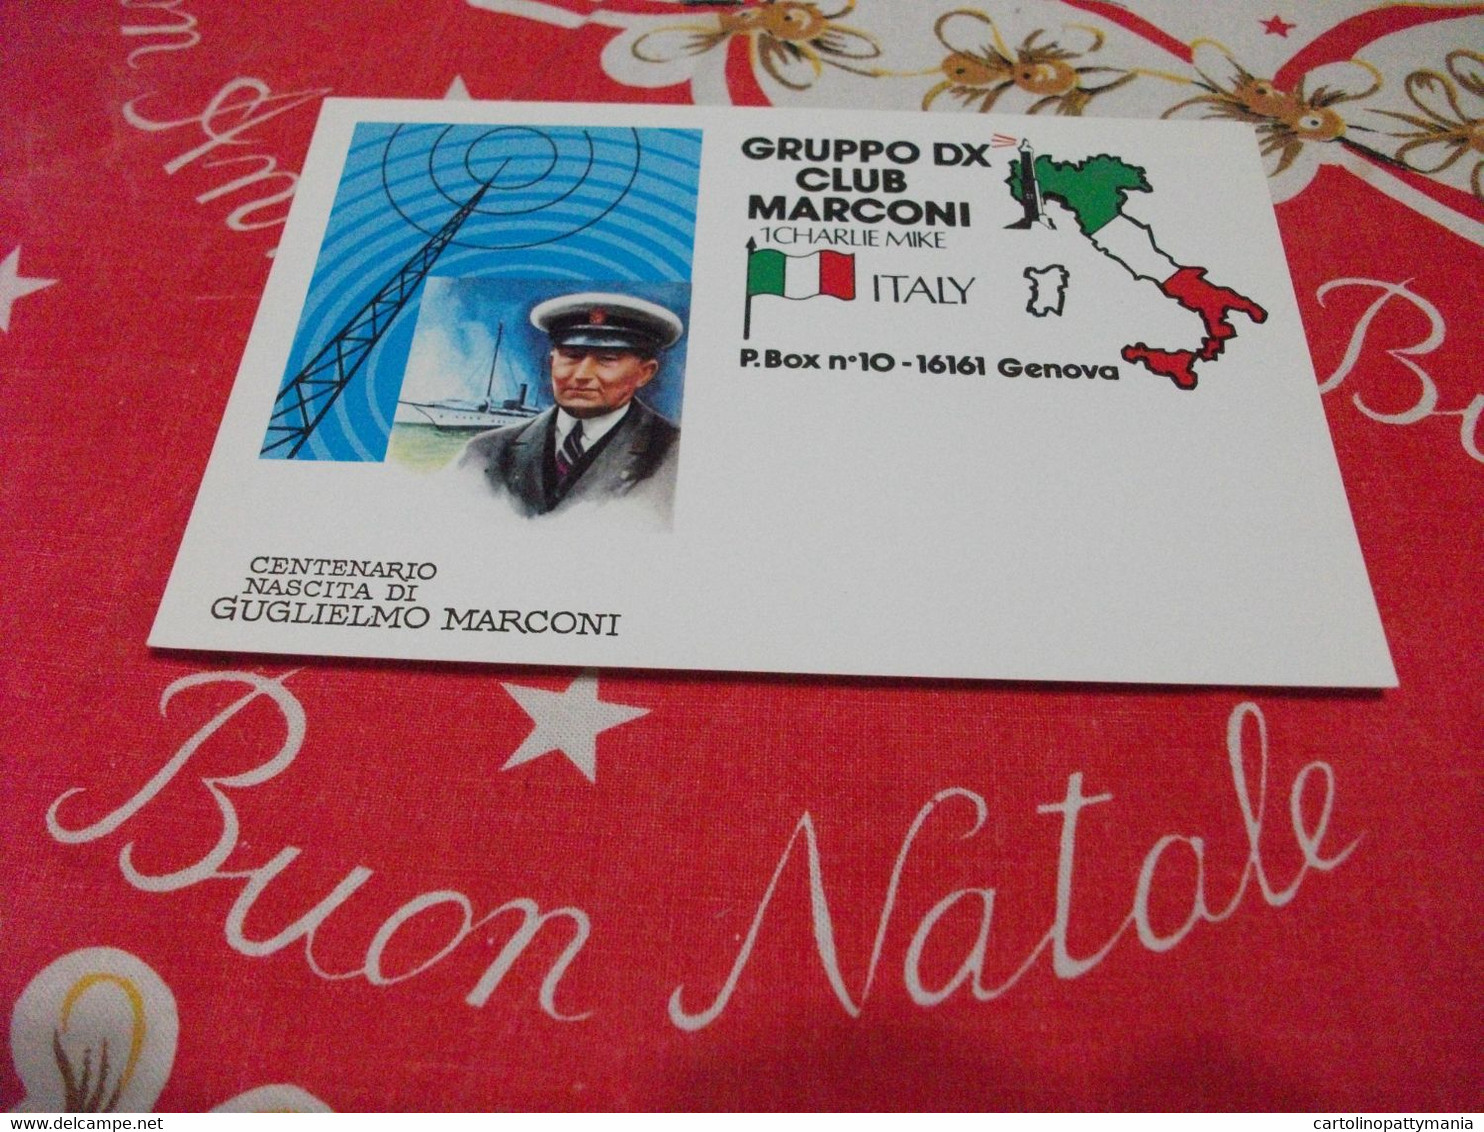 Centenario Nascita Di Guglielmo Marconi QLS GRUPPODX CLUB MARCONI NOBEL PER LA FISICA 1909 - Premi Nobel